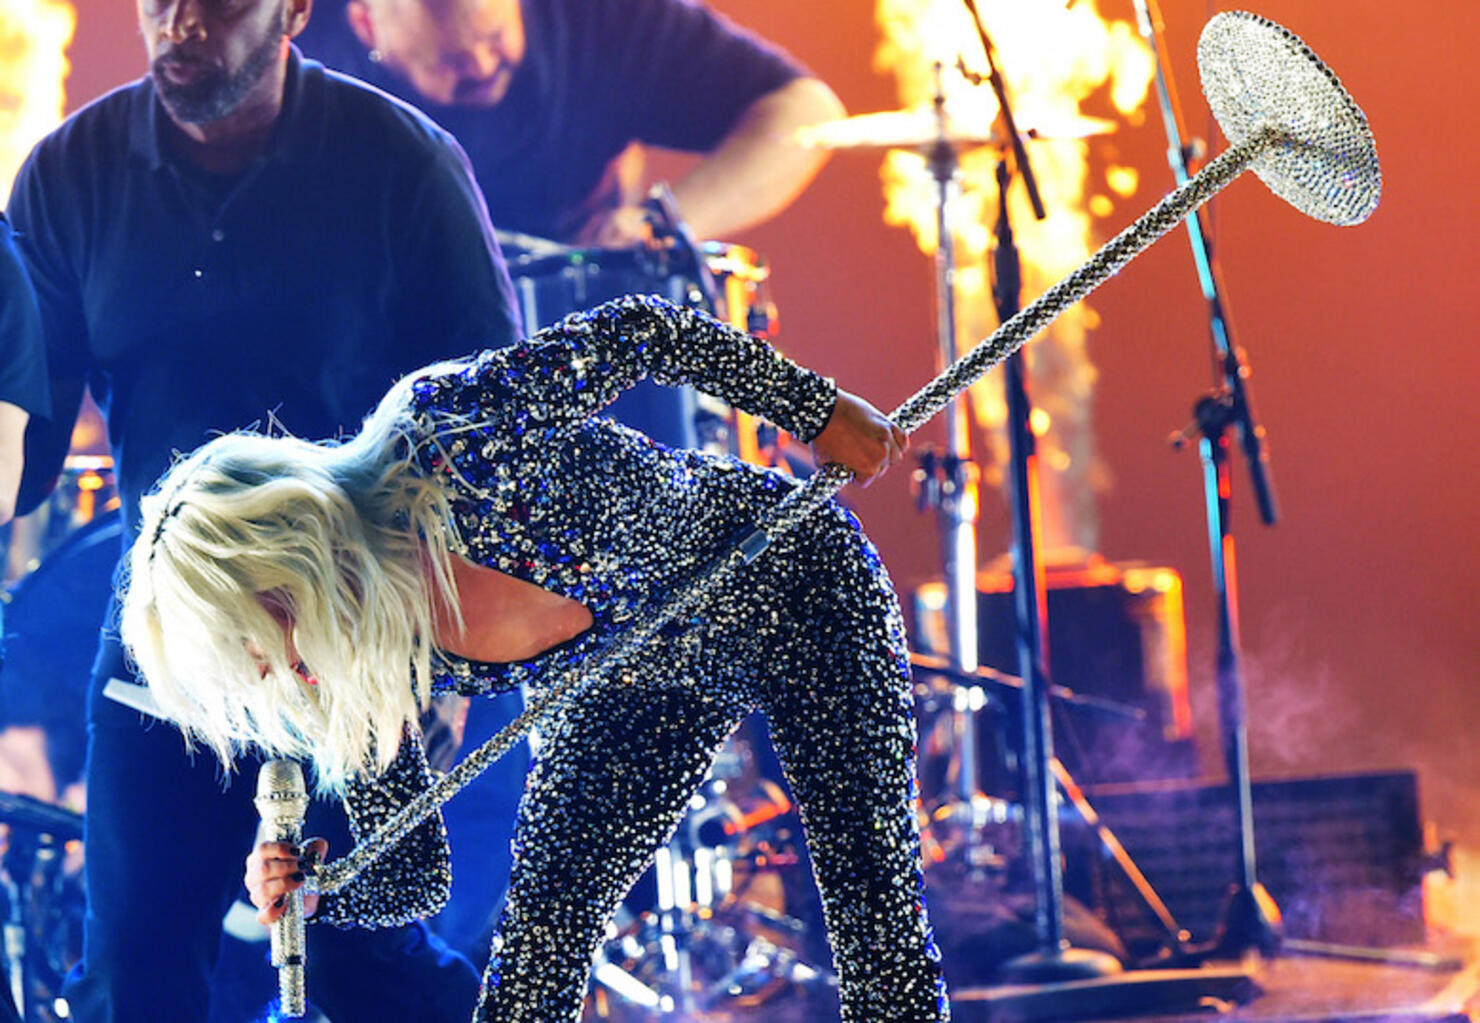 Lady Gaga performs at the 2019 Grammys